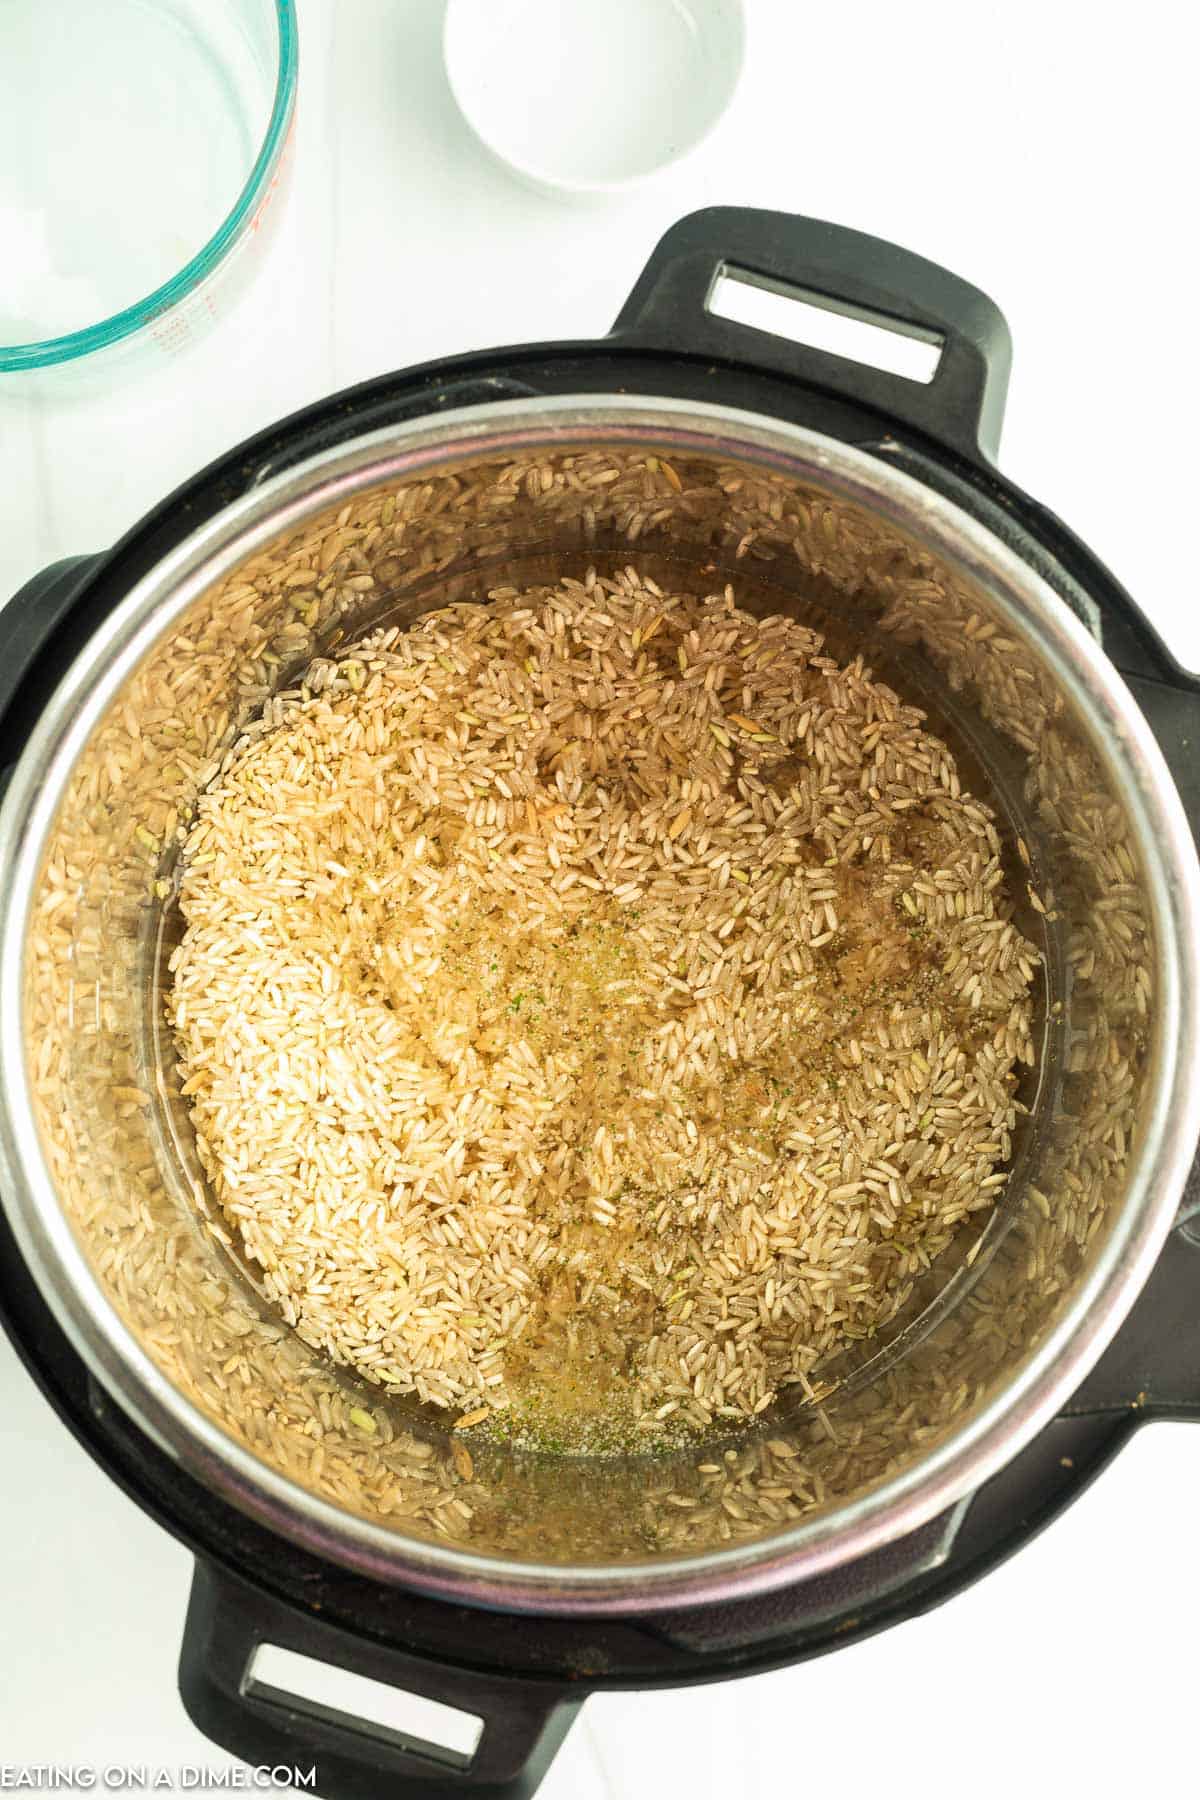 Add in garlic salt to the instant pot